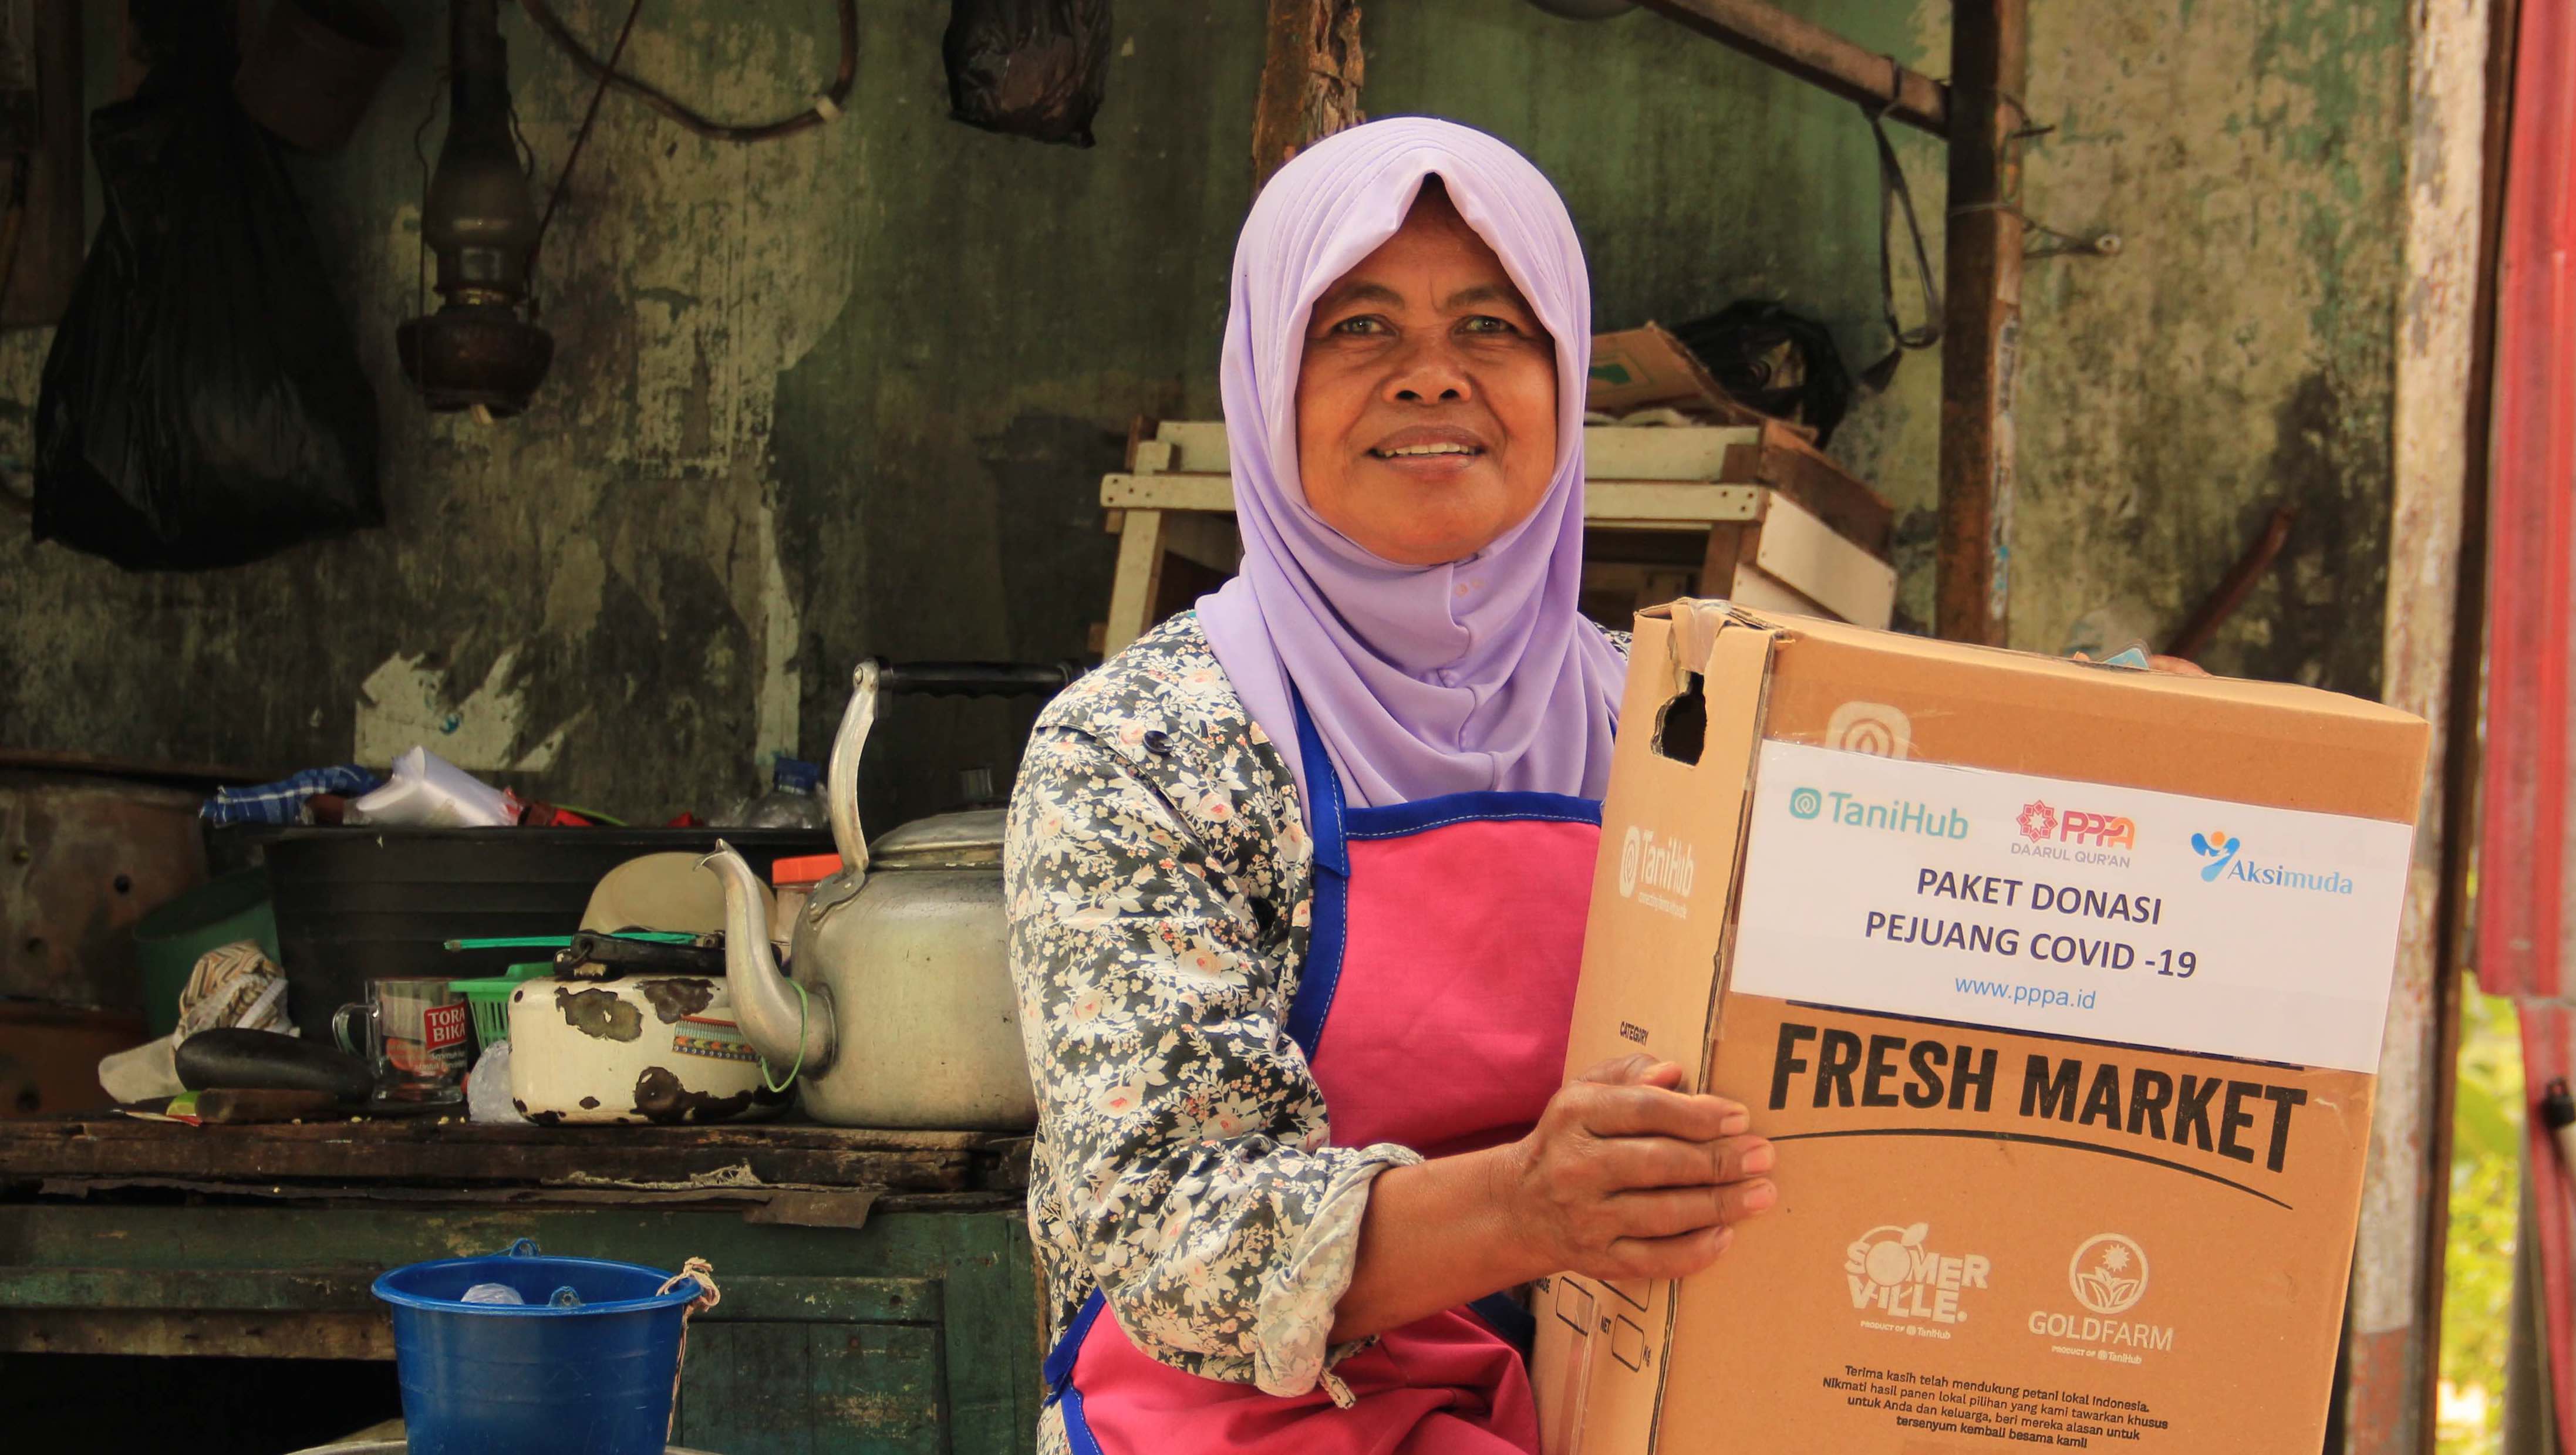 PPPA Daarul Qurâ€™an Yogyakarta Salurkan Bantuan dari Aksimuda dan TaniHub